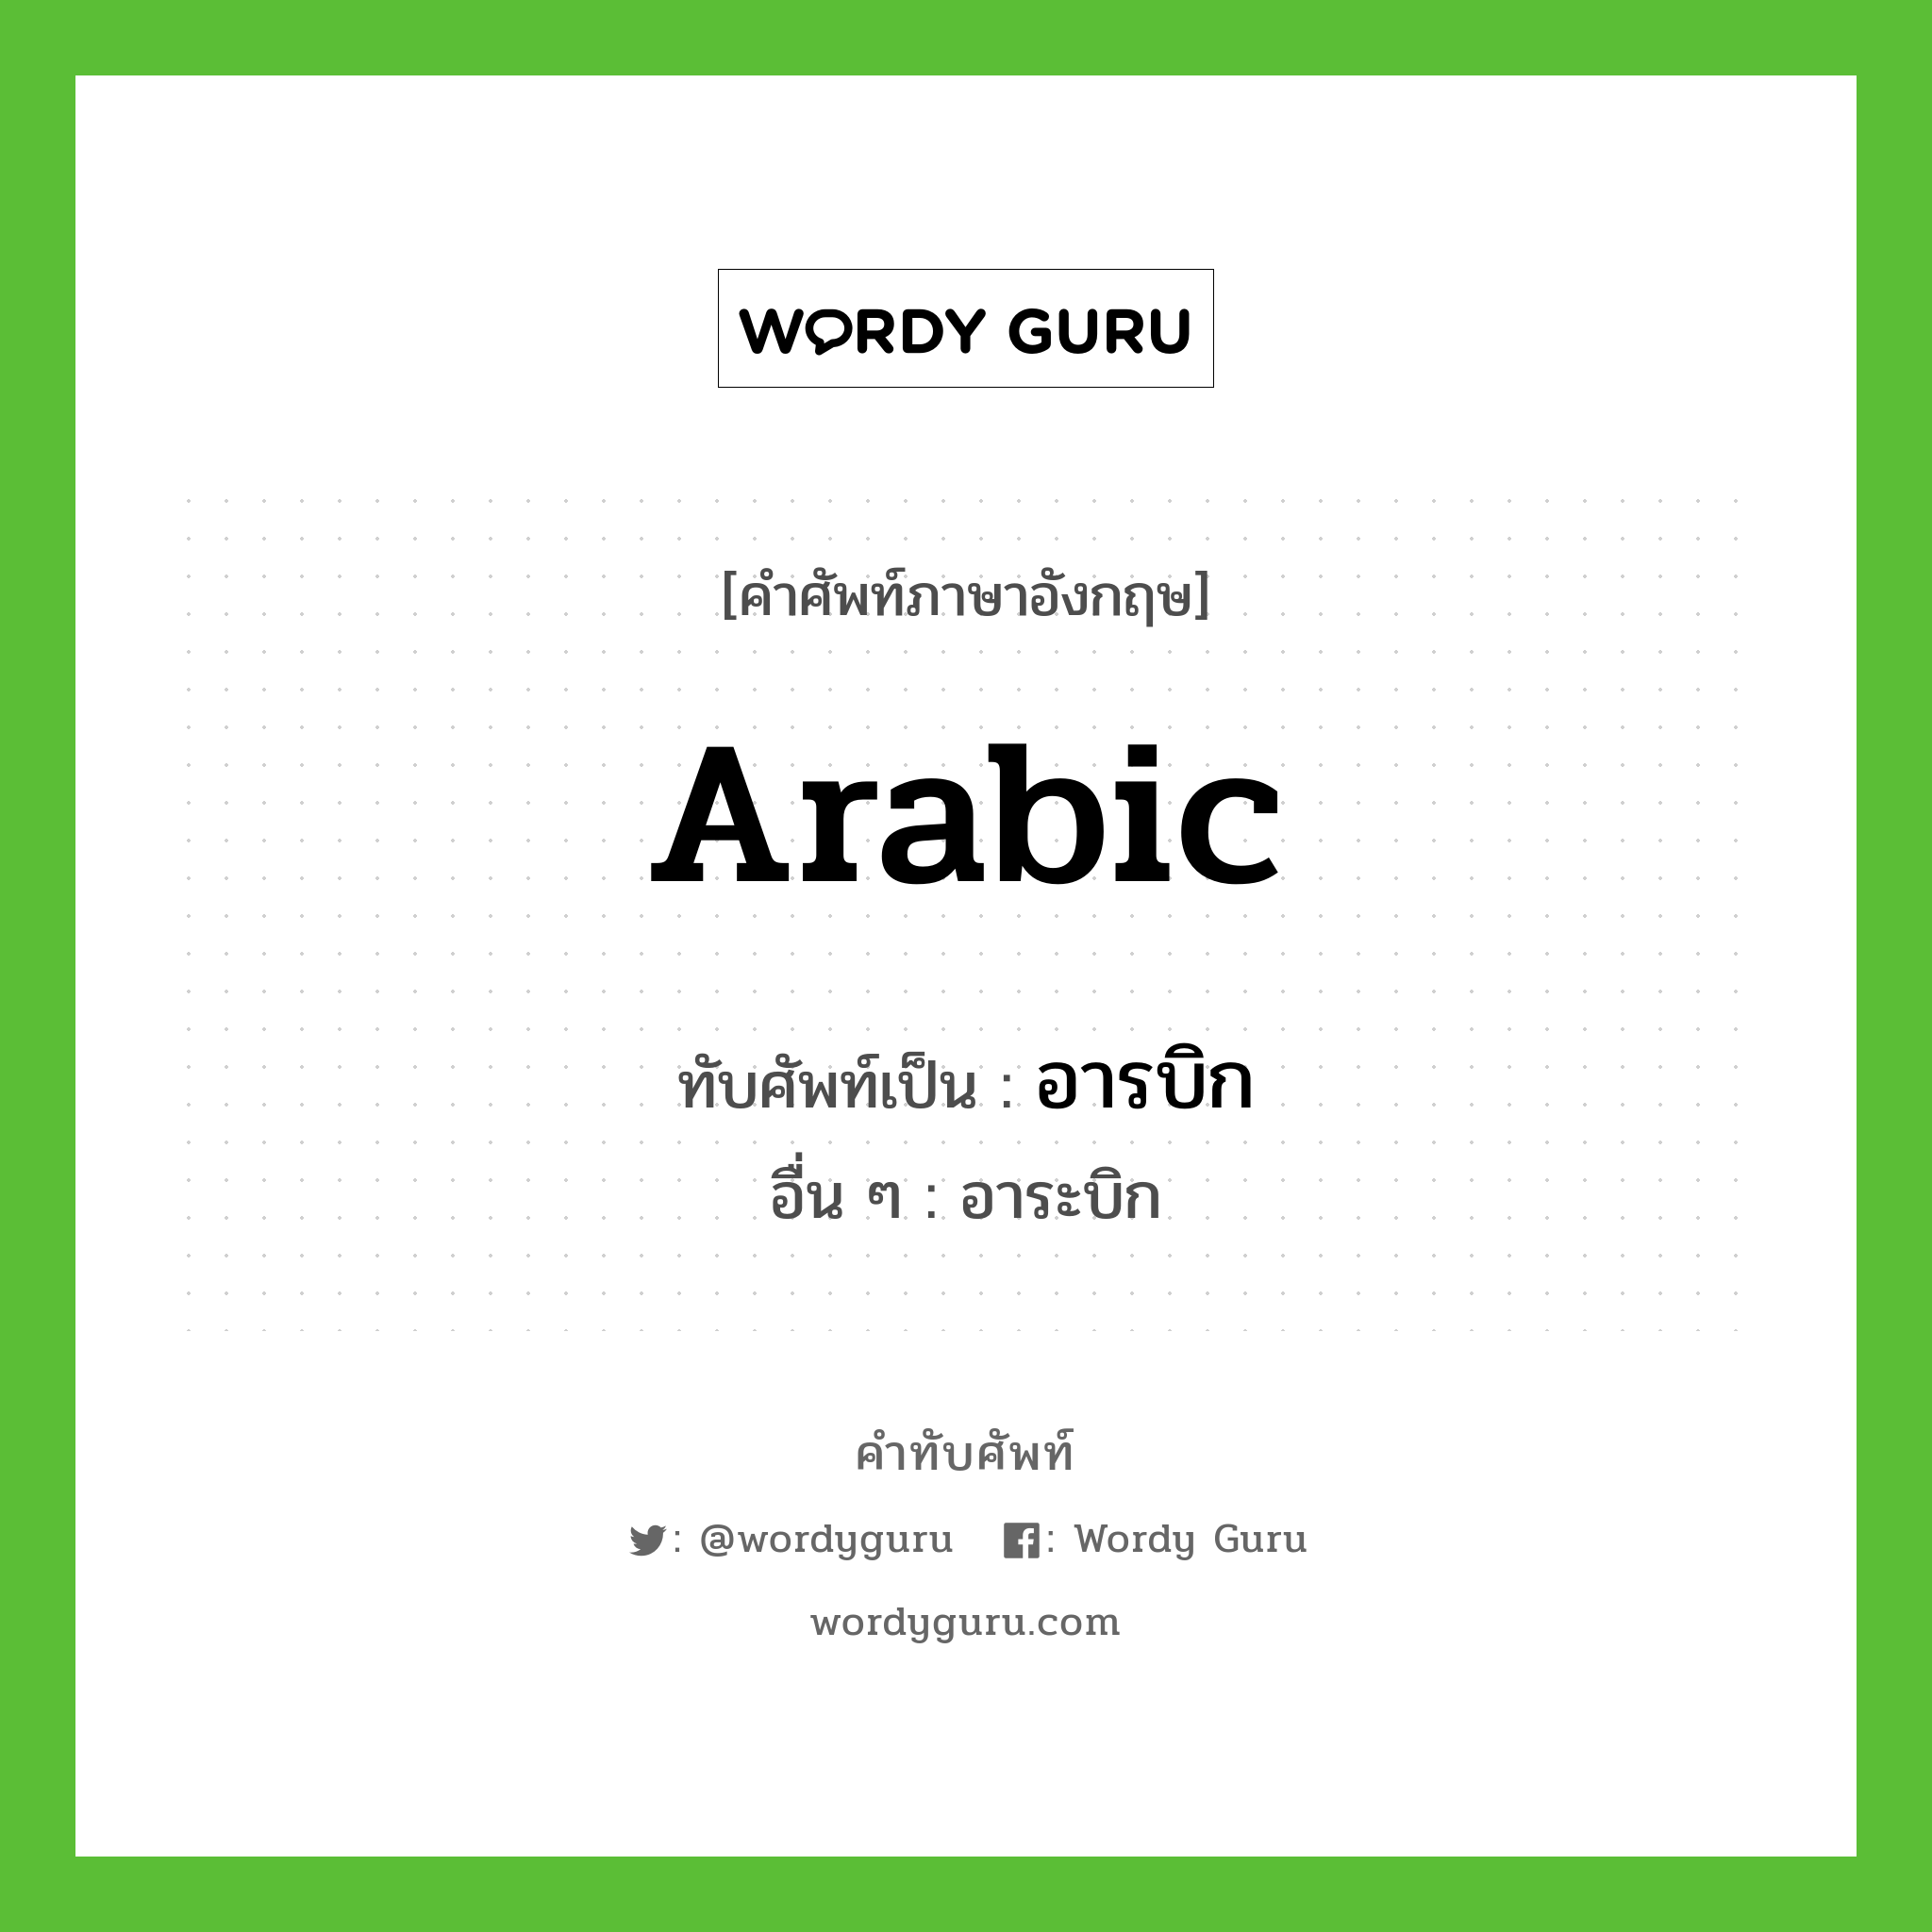 arabic เขียนเป็นคำไทยว่าอะไร?, คำศัพท์ภาษาอังกฤษ arabic ทับศัพท์เป็น อารบิก อื่น ๆ อาระบิก